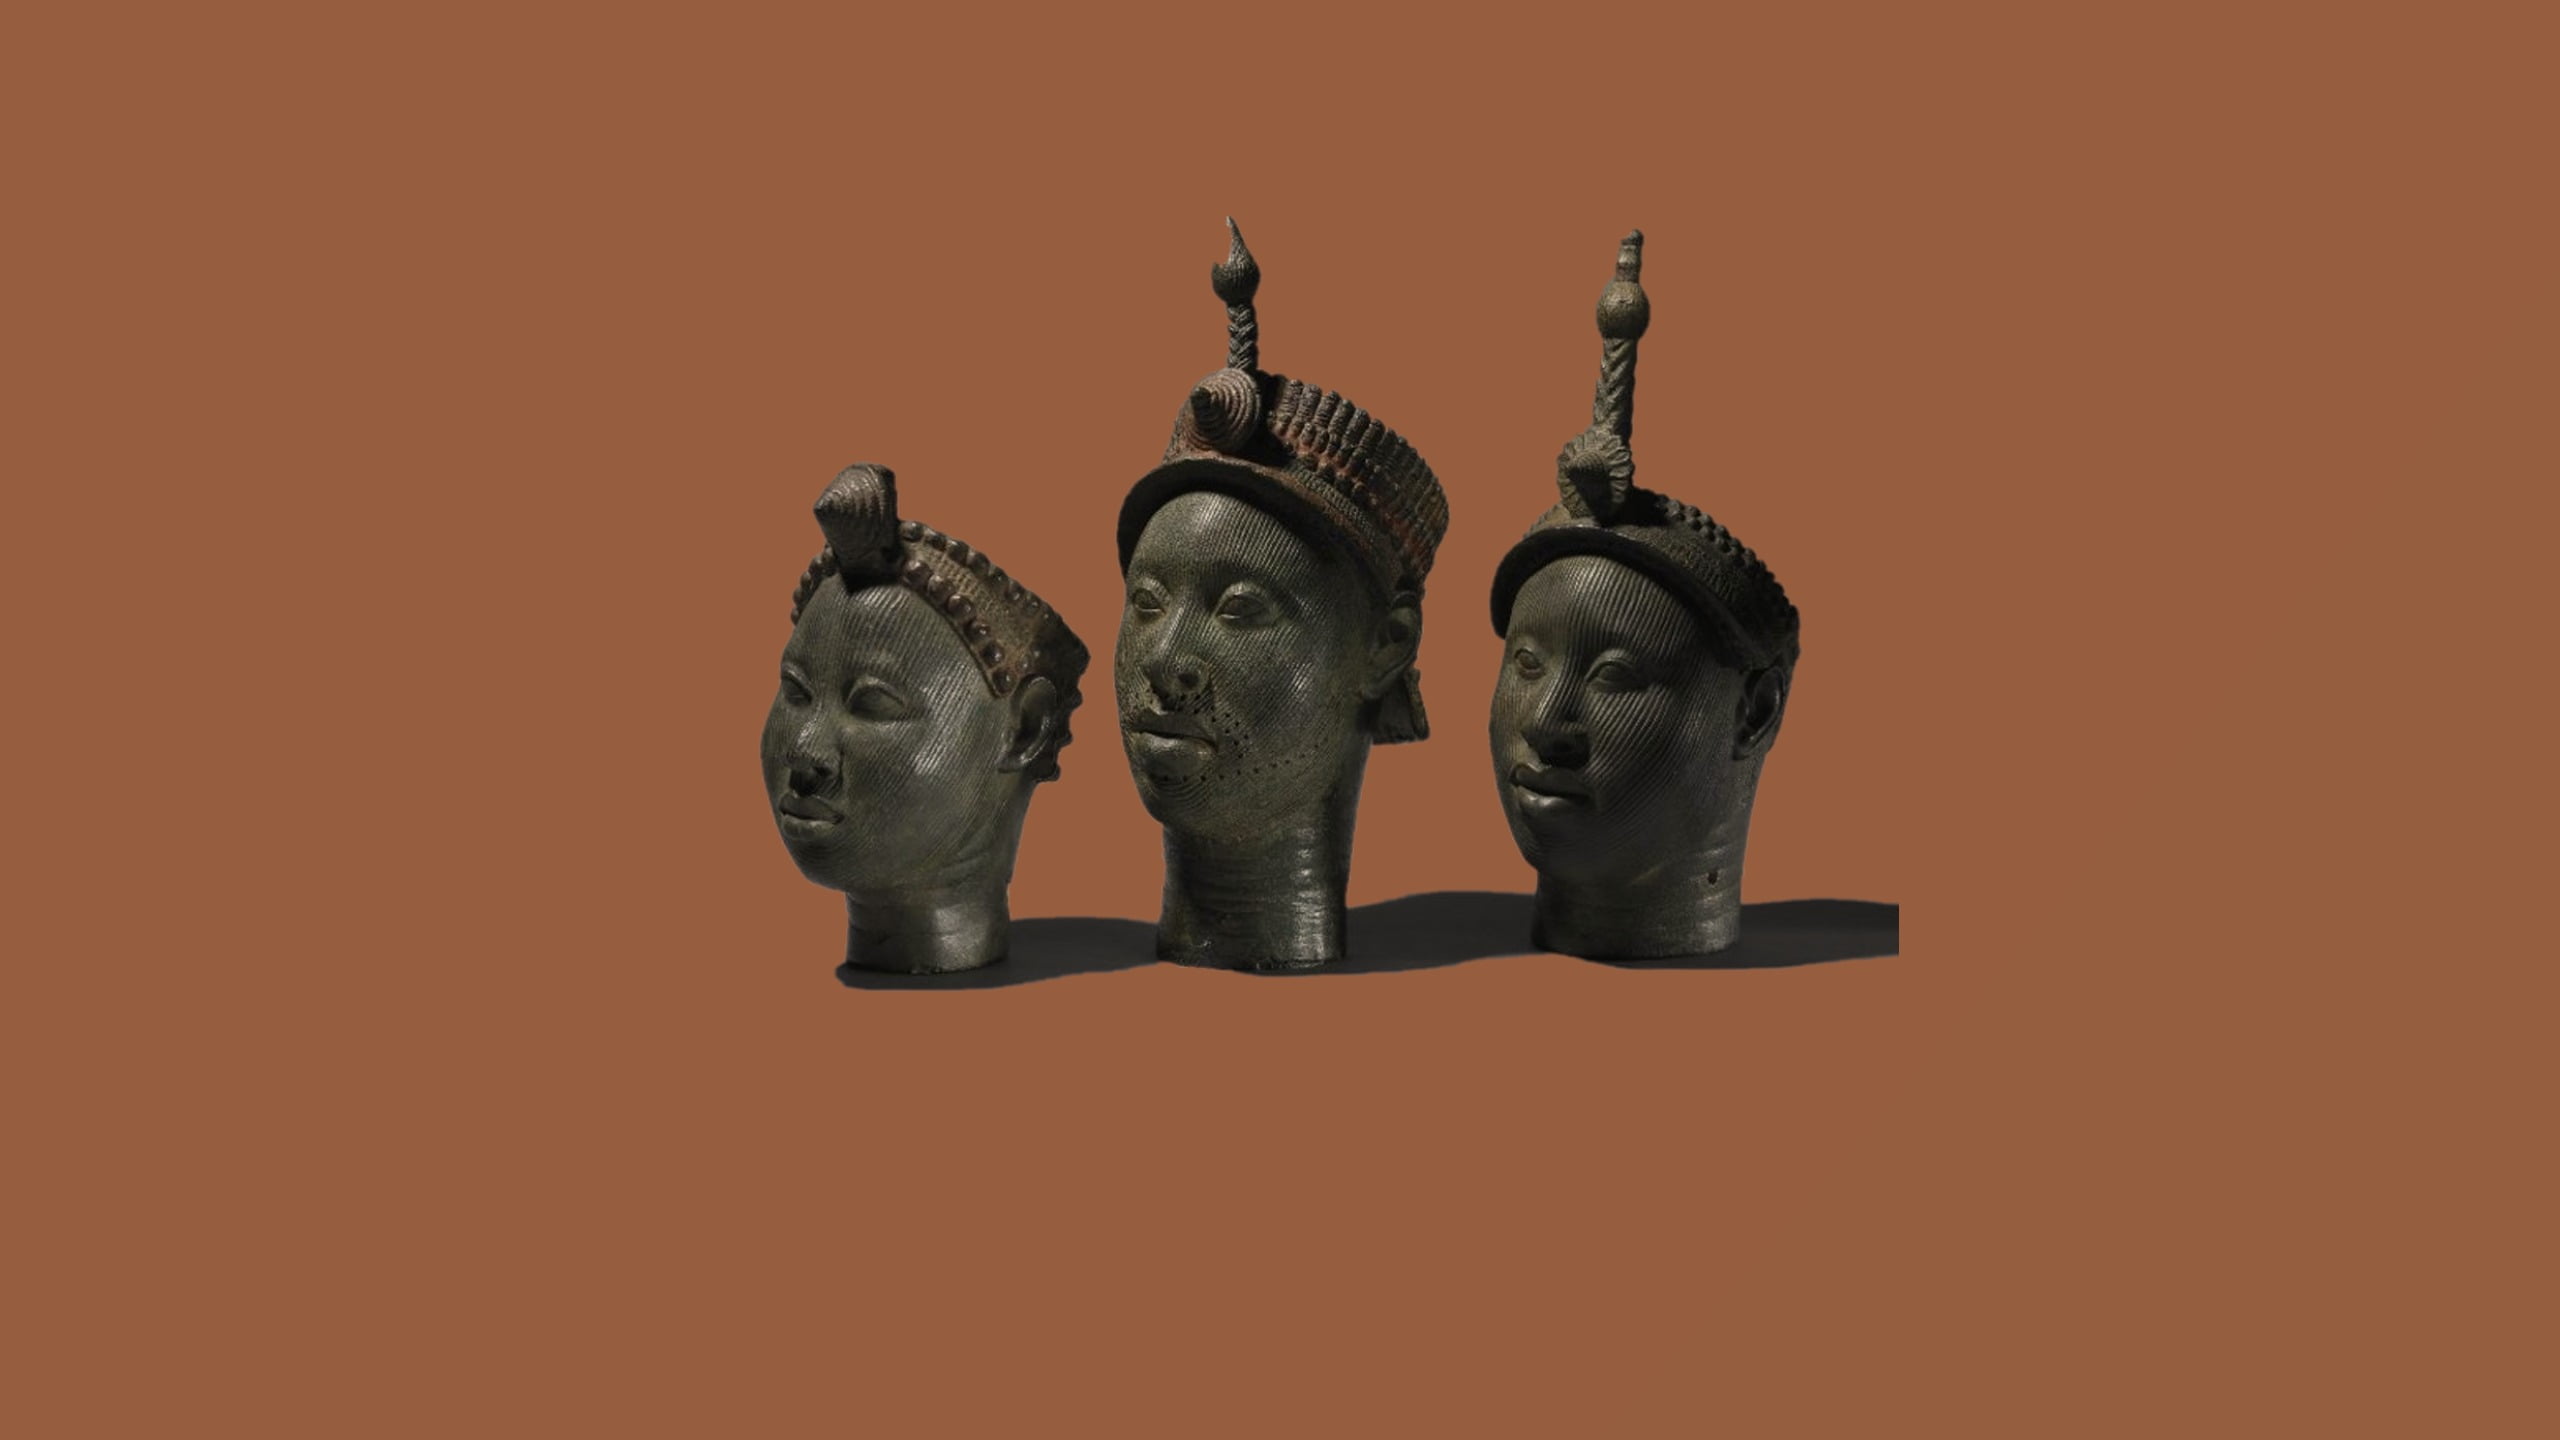 Yoruba, minimalism, Windows 10, Nigeria, art and craft, representation